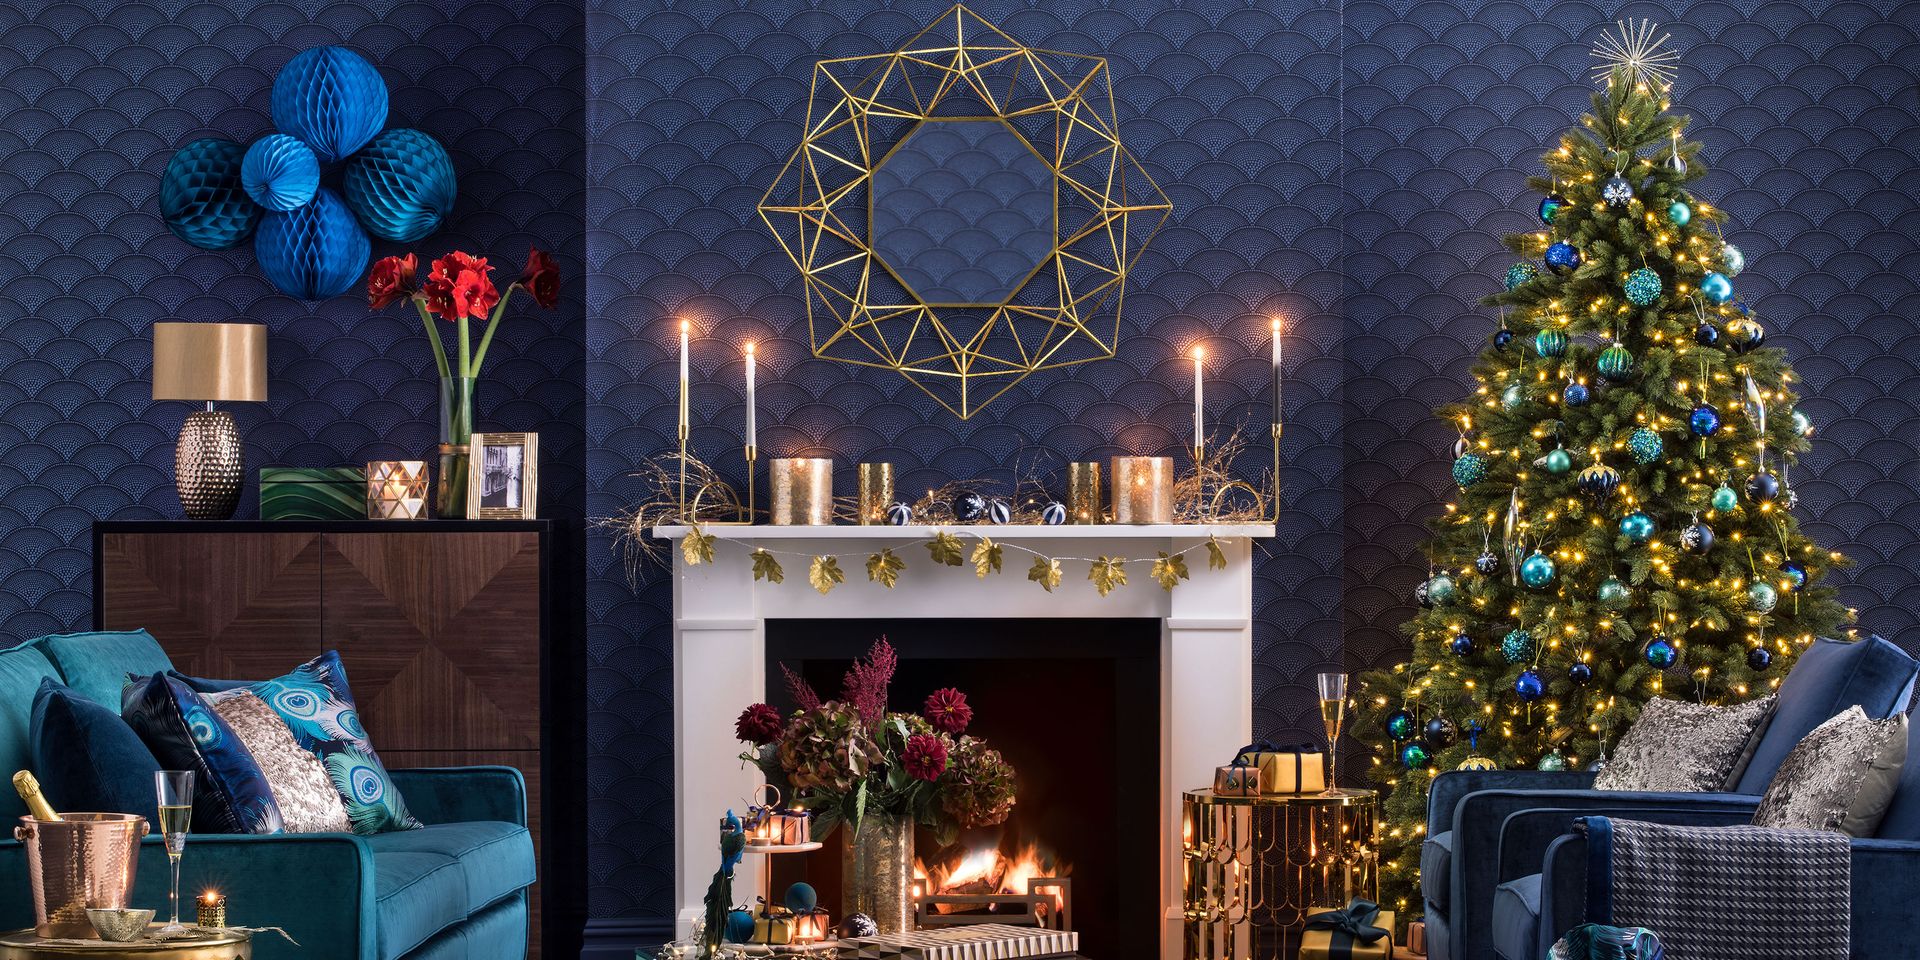 40 Christmas living room decor ideas to transform your home for the ...